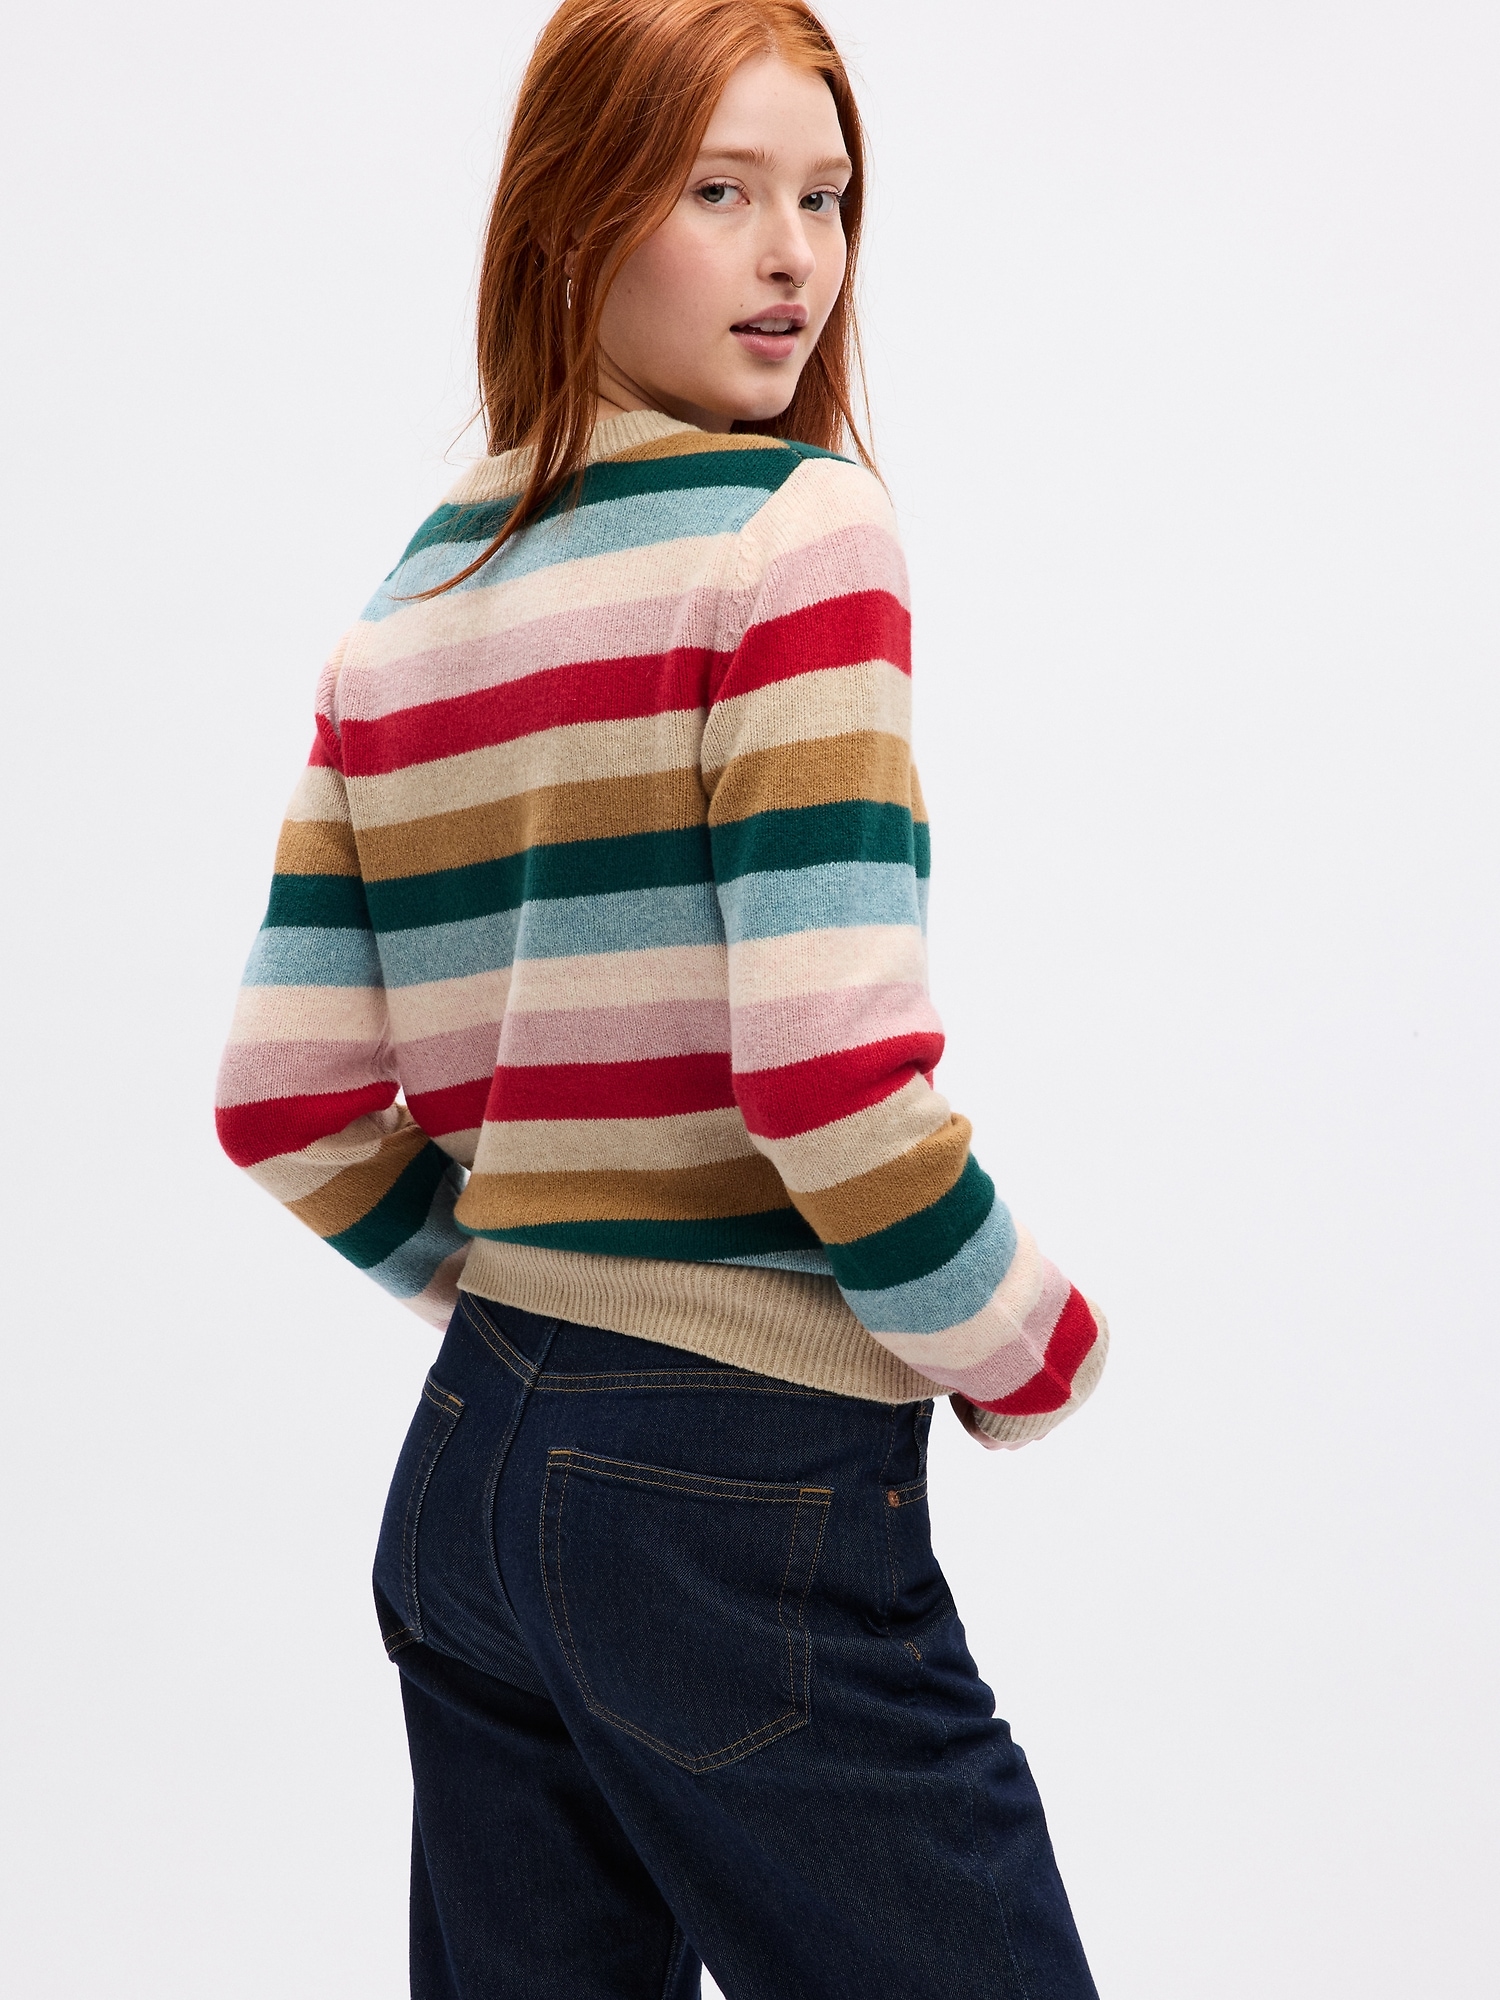 CashSoft Crewneck Sweater | Gap